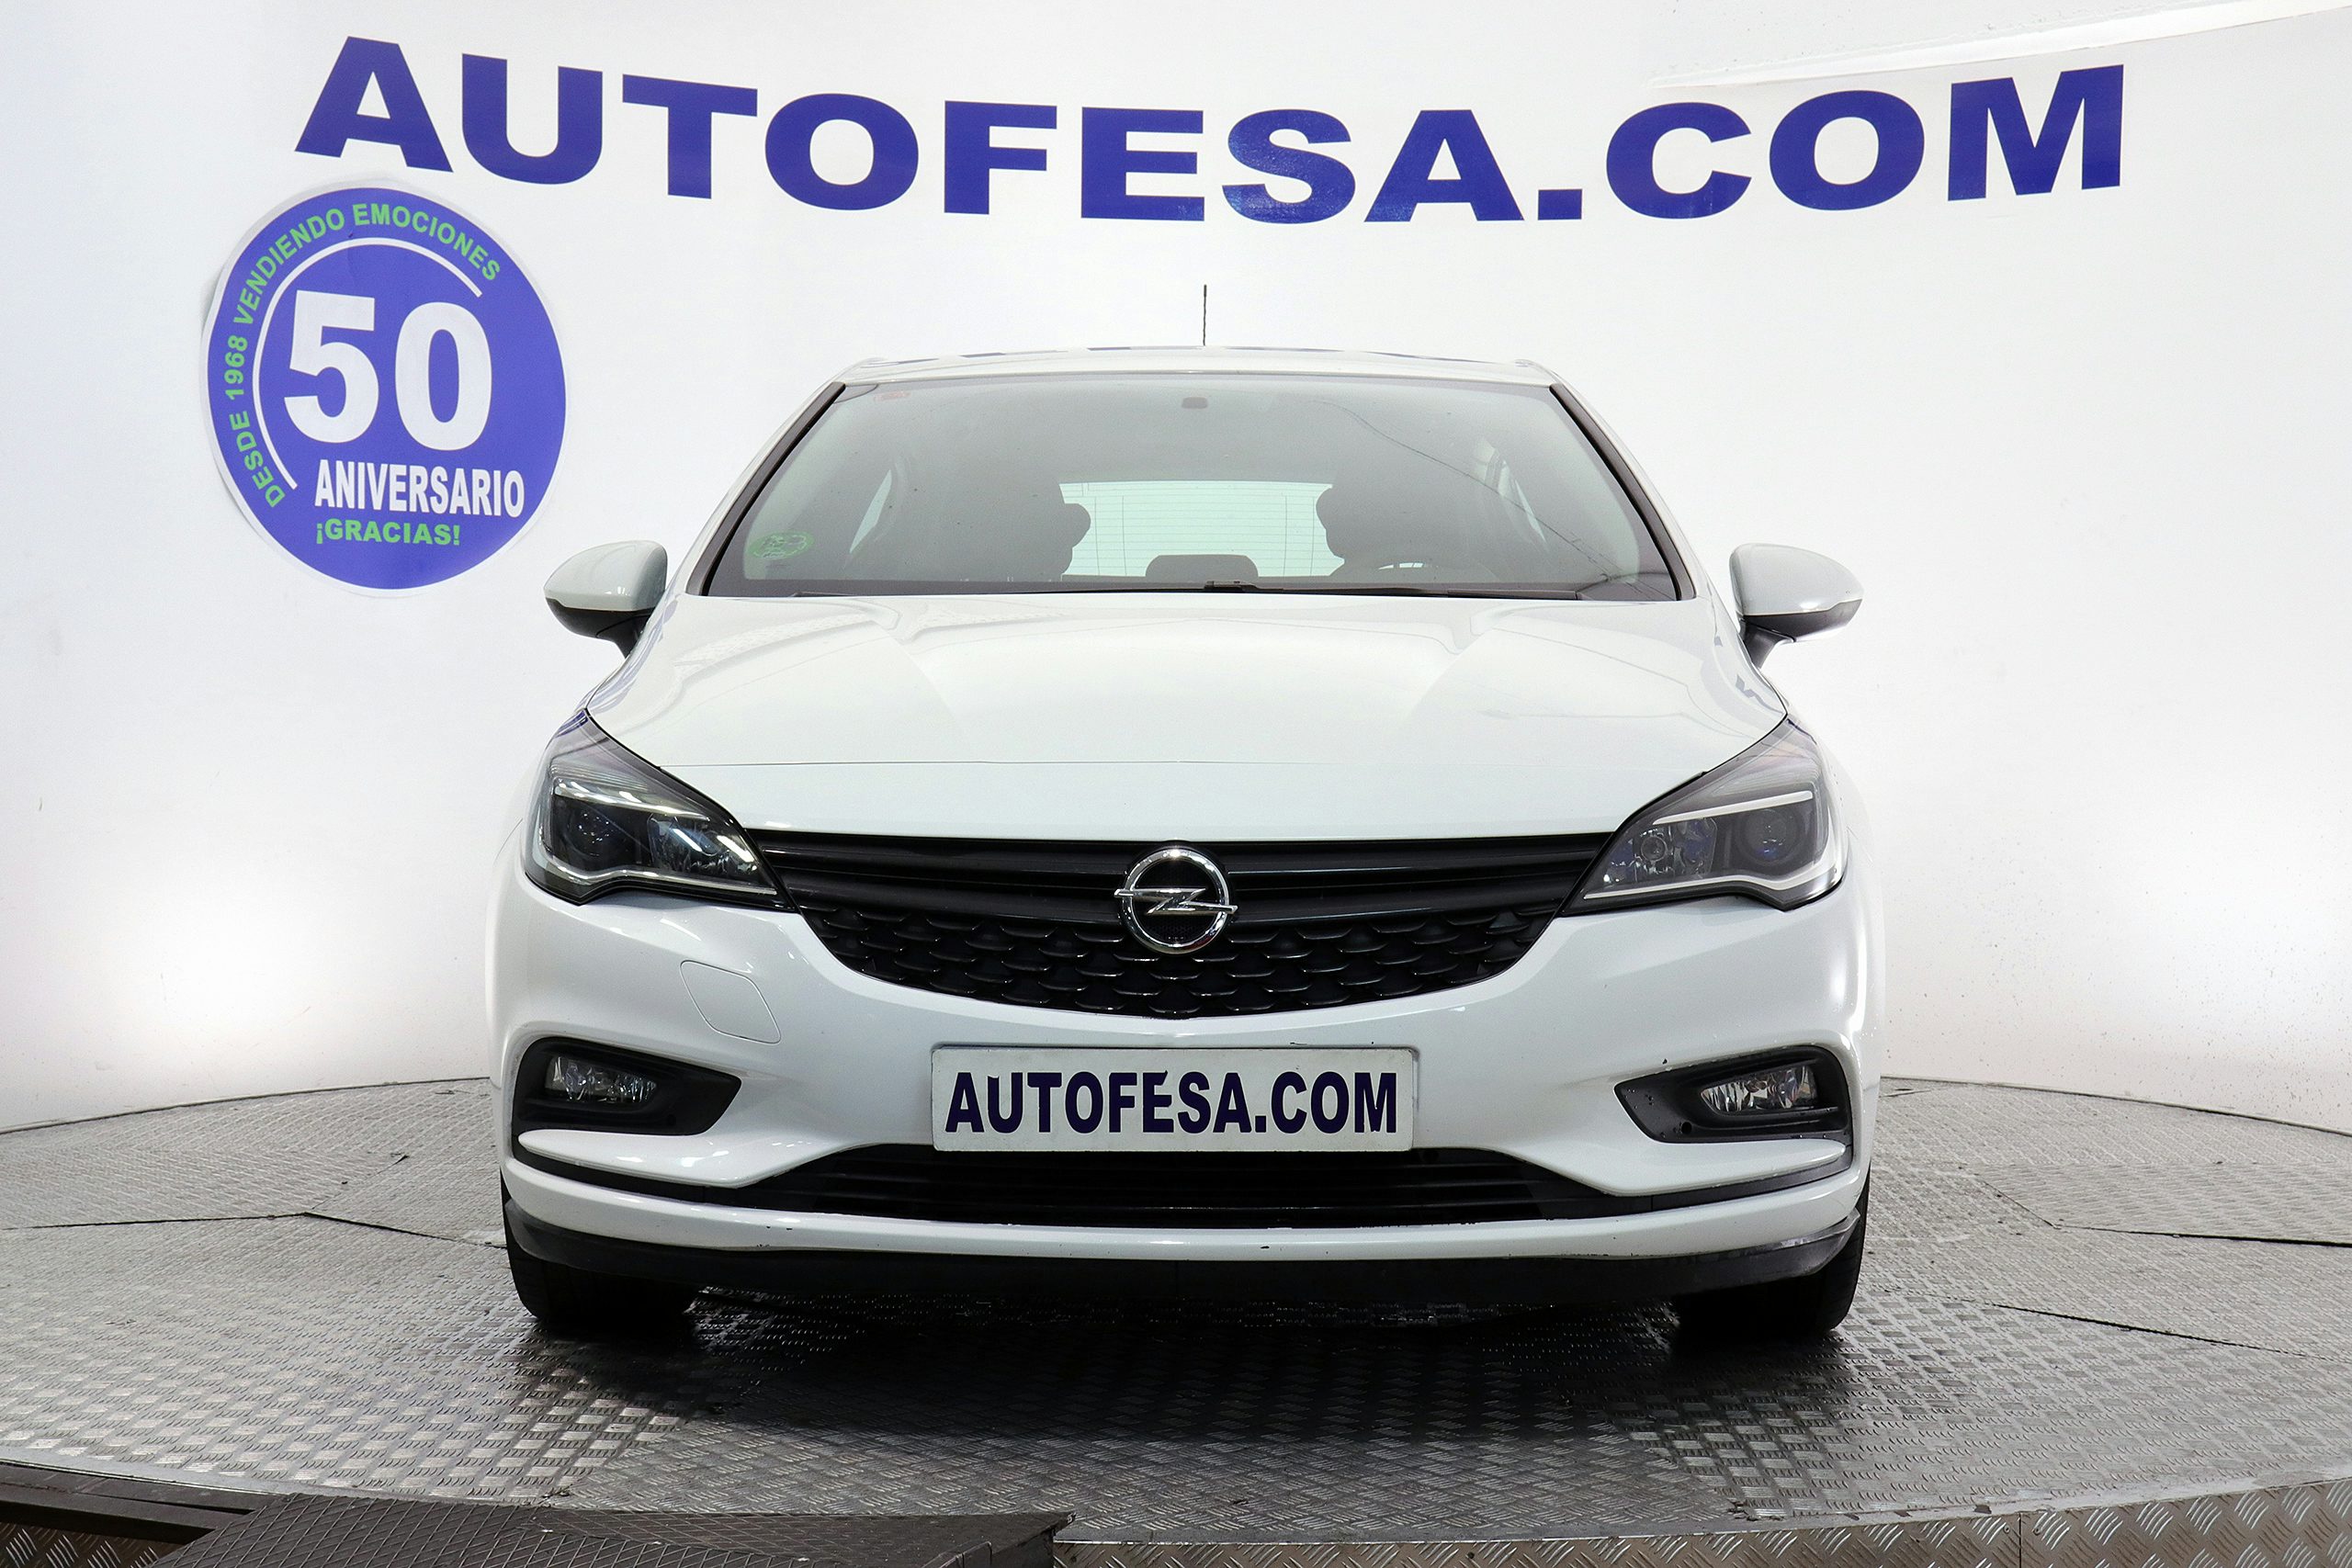 Opel Astra 1.6 CDTi 110cv Selective 5p - Foto 2